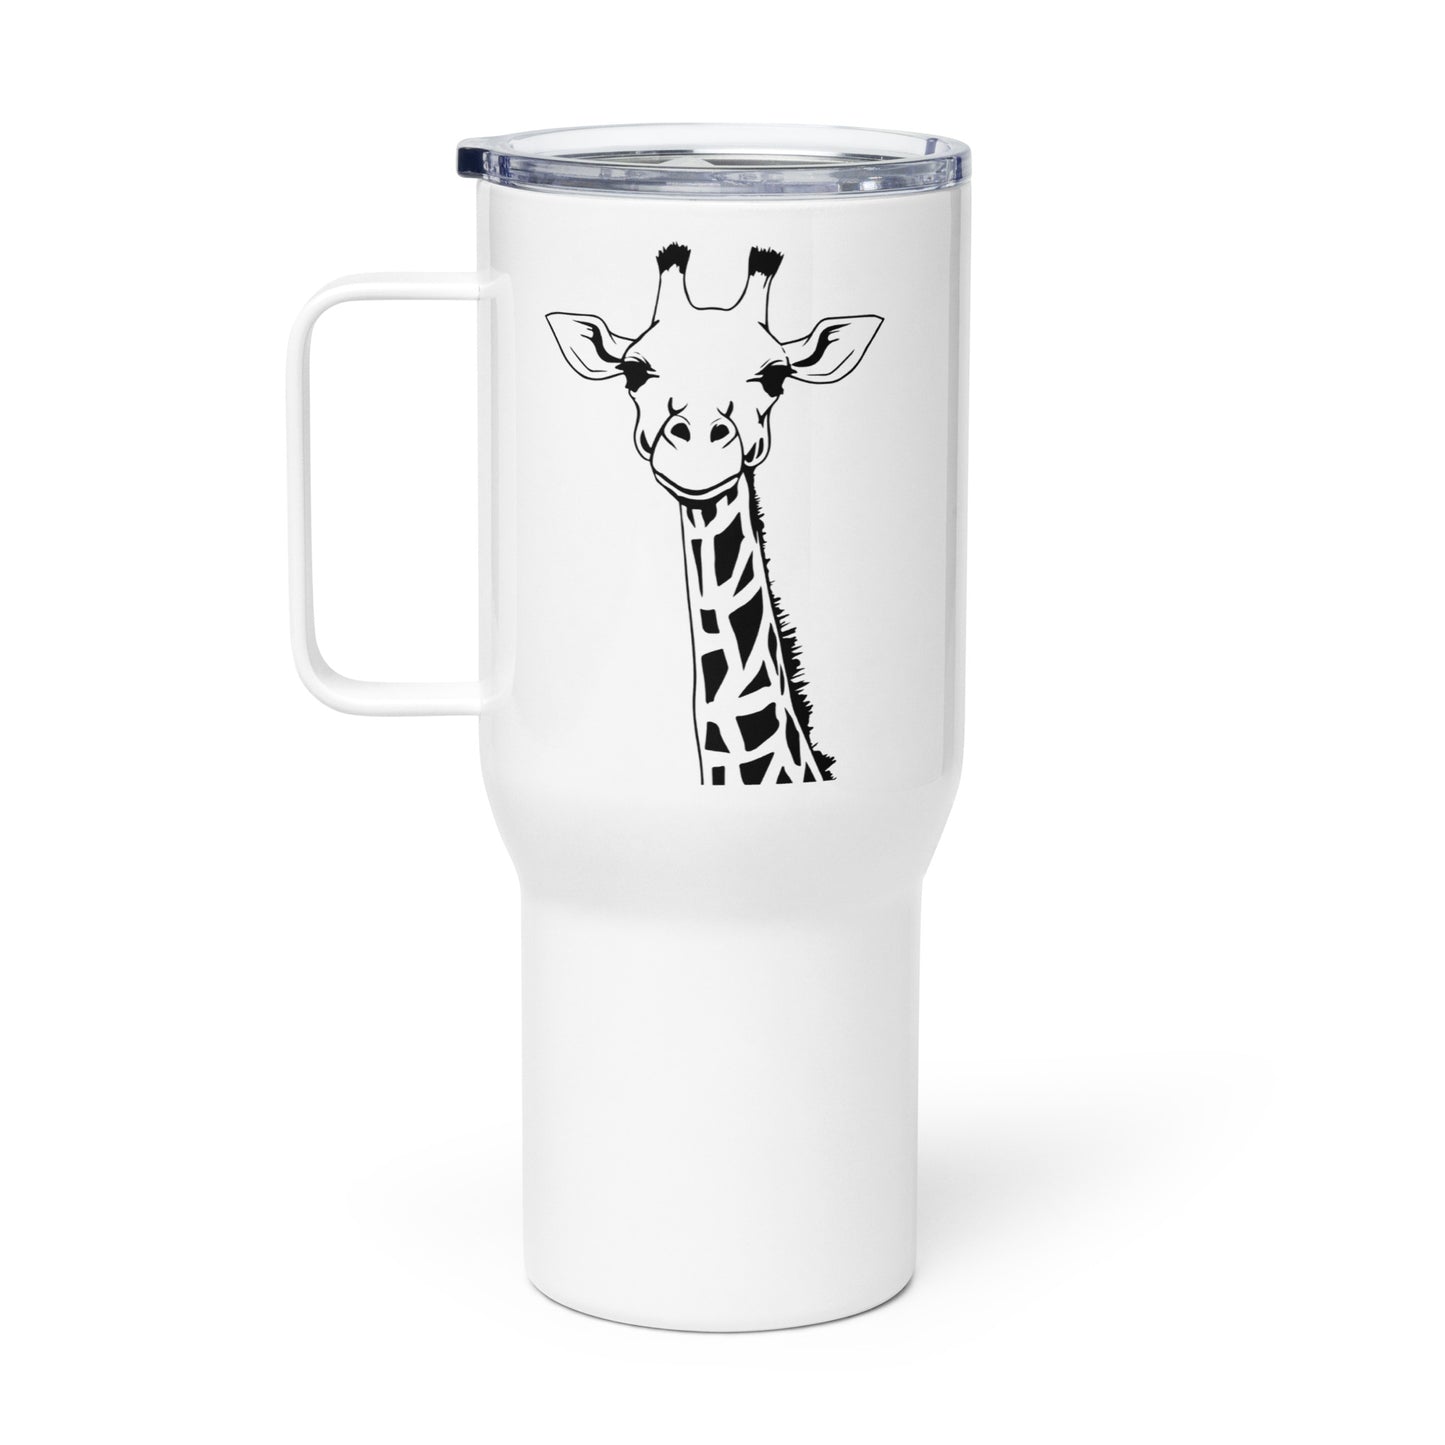 Giraffe Travel mug with a handle